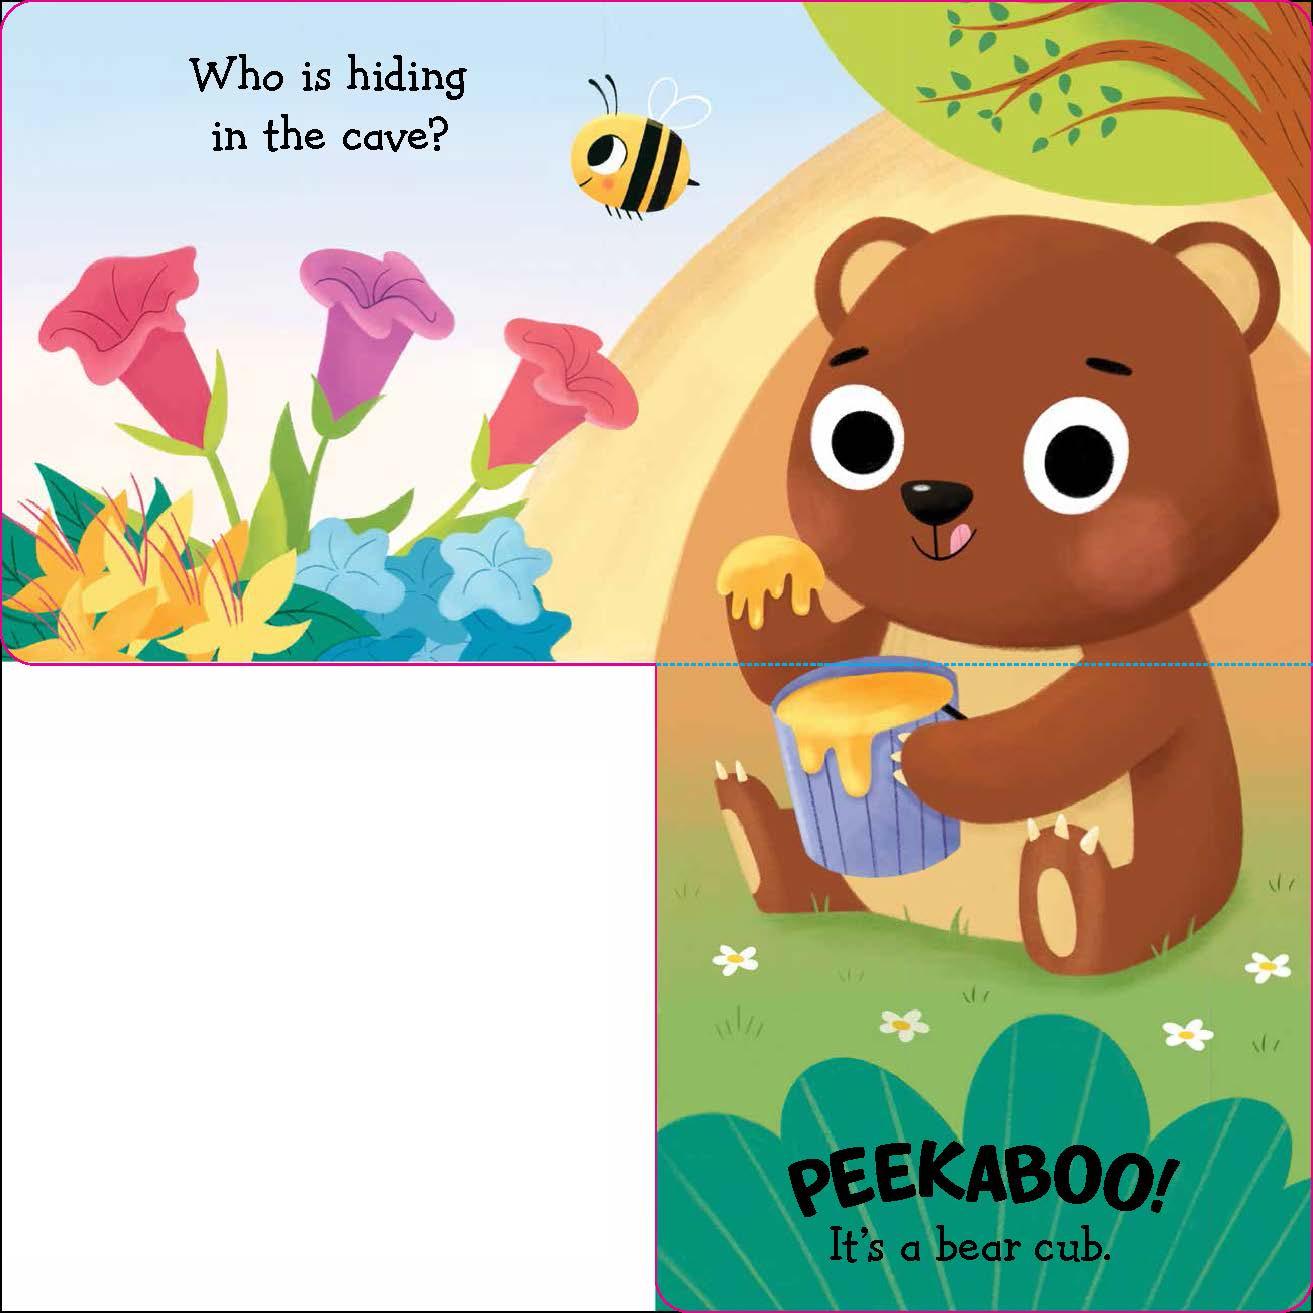 Peekaboo! Baby Animals - Сlever-publishing